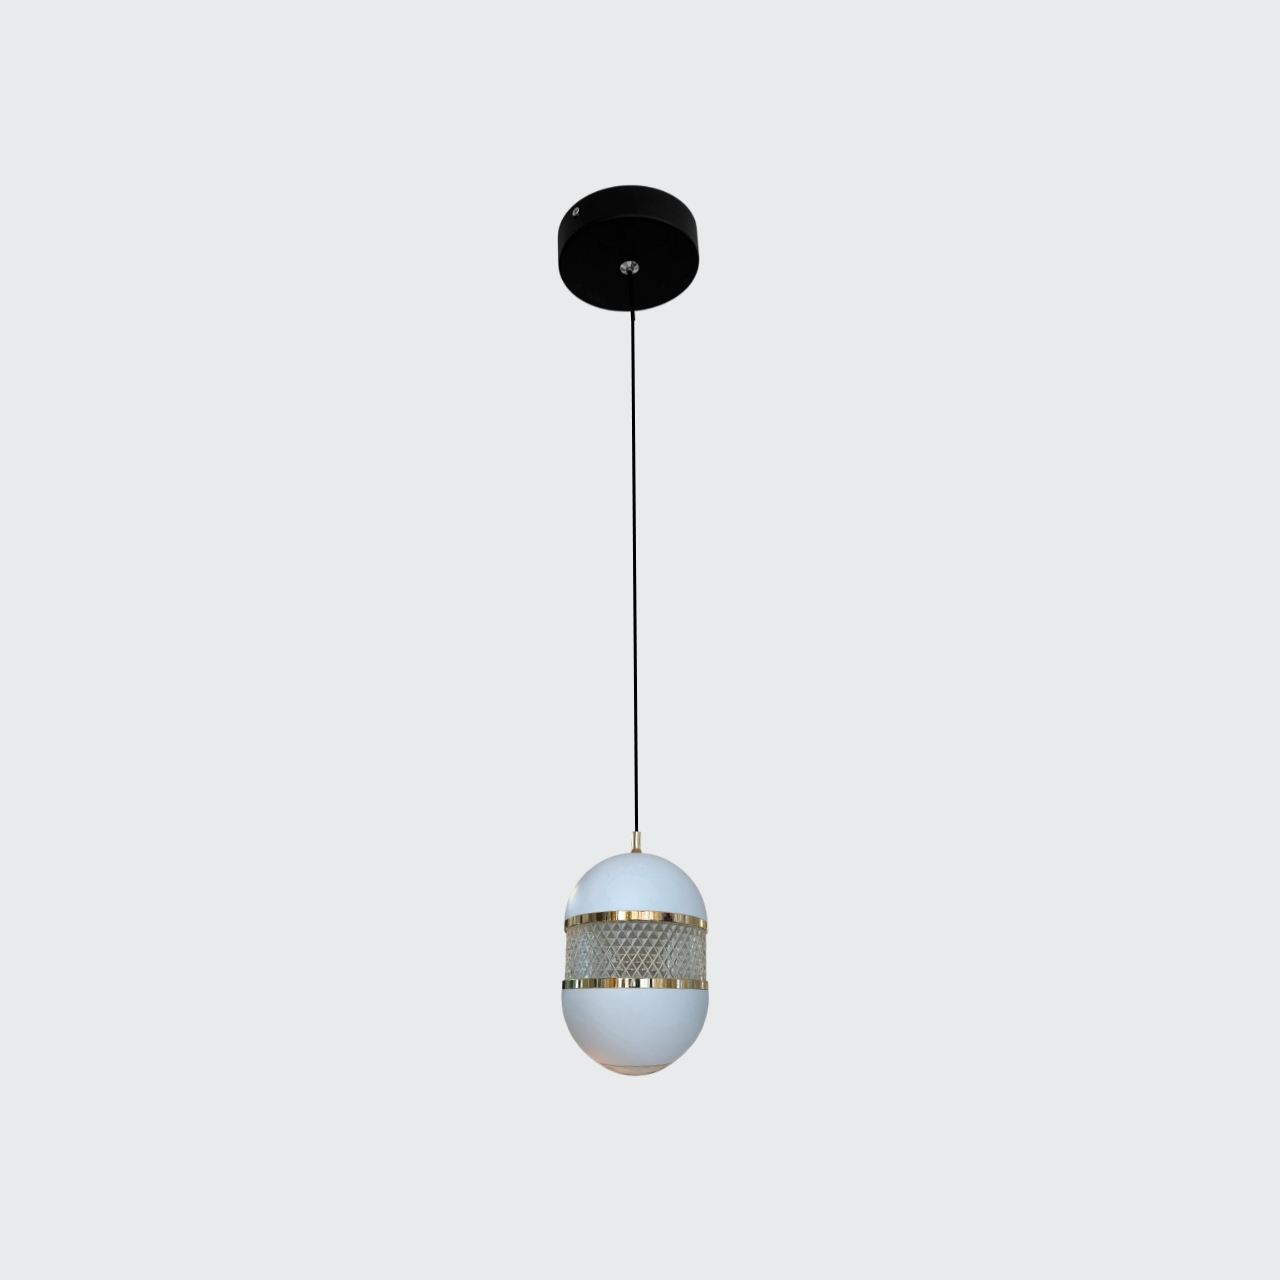 Elegant pendant light 3000K kitchen dining bedroom living room